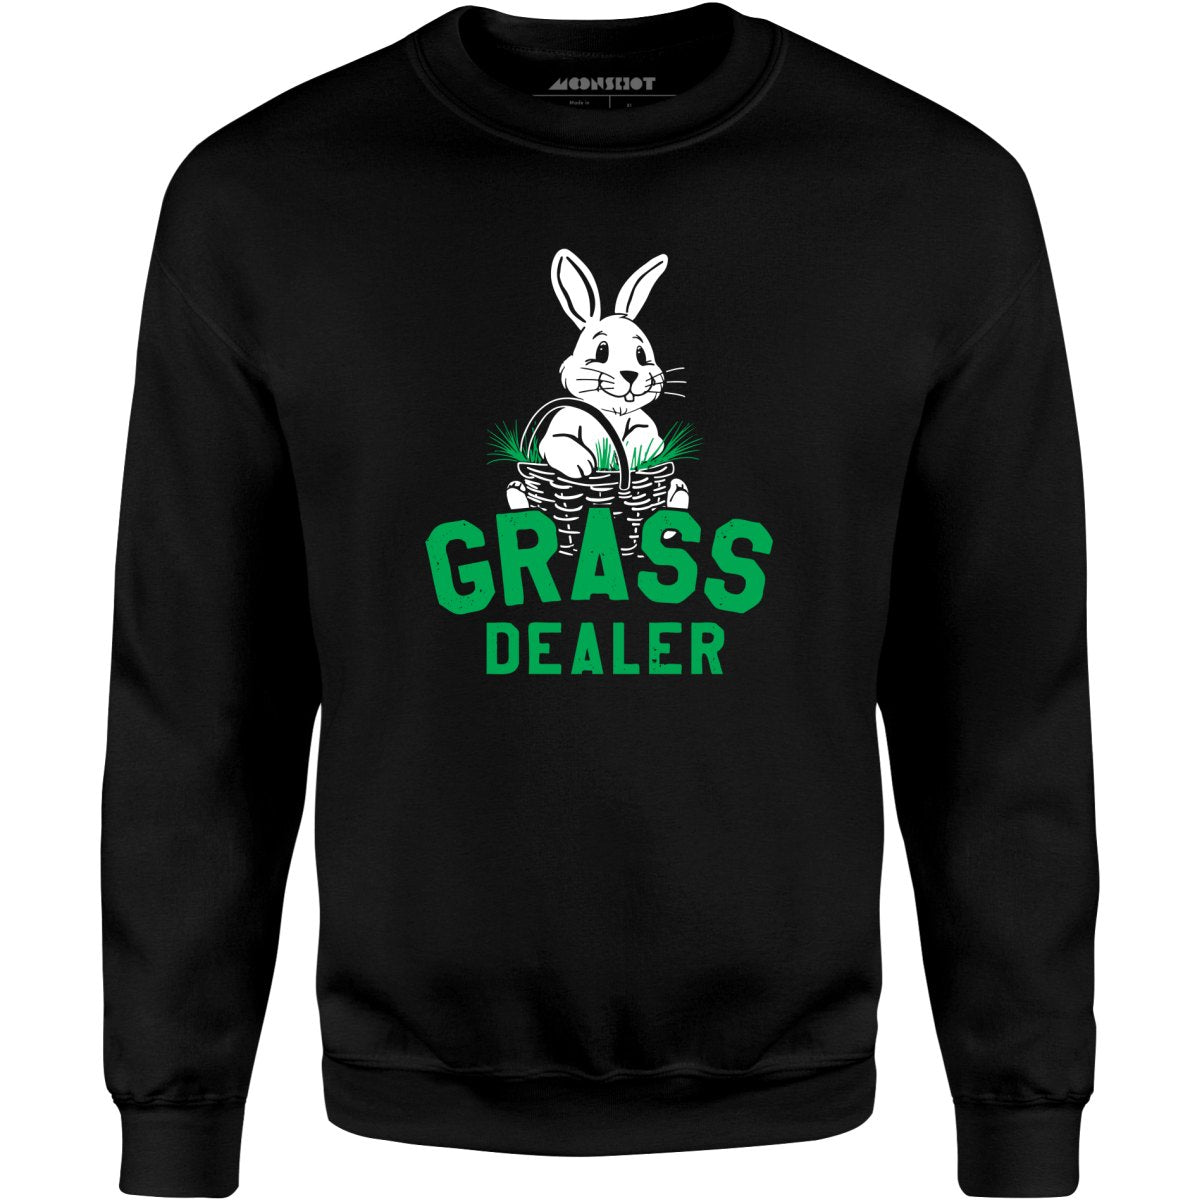 Grass Dealer - Unisex Sweatshirt